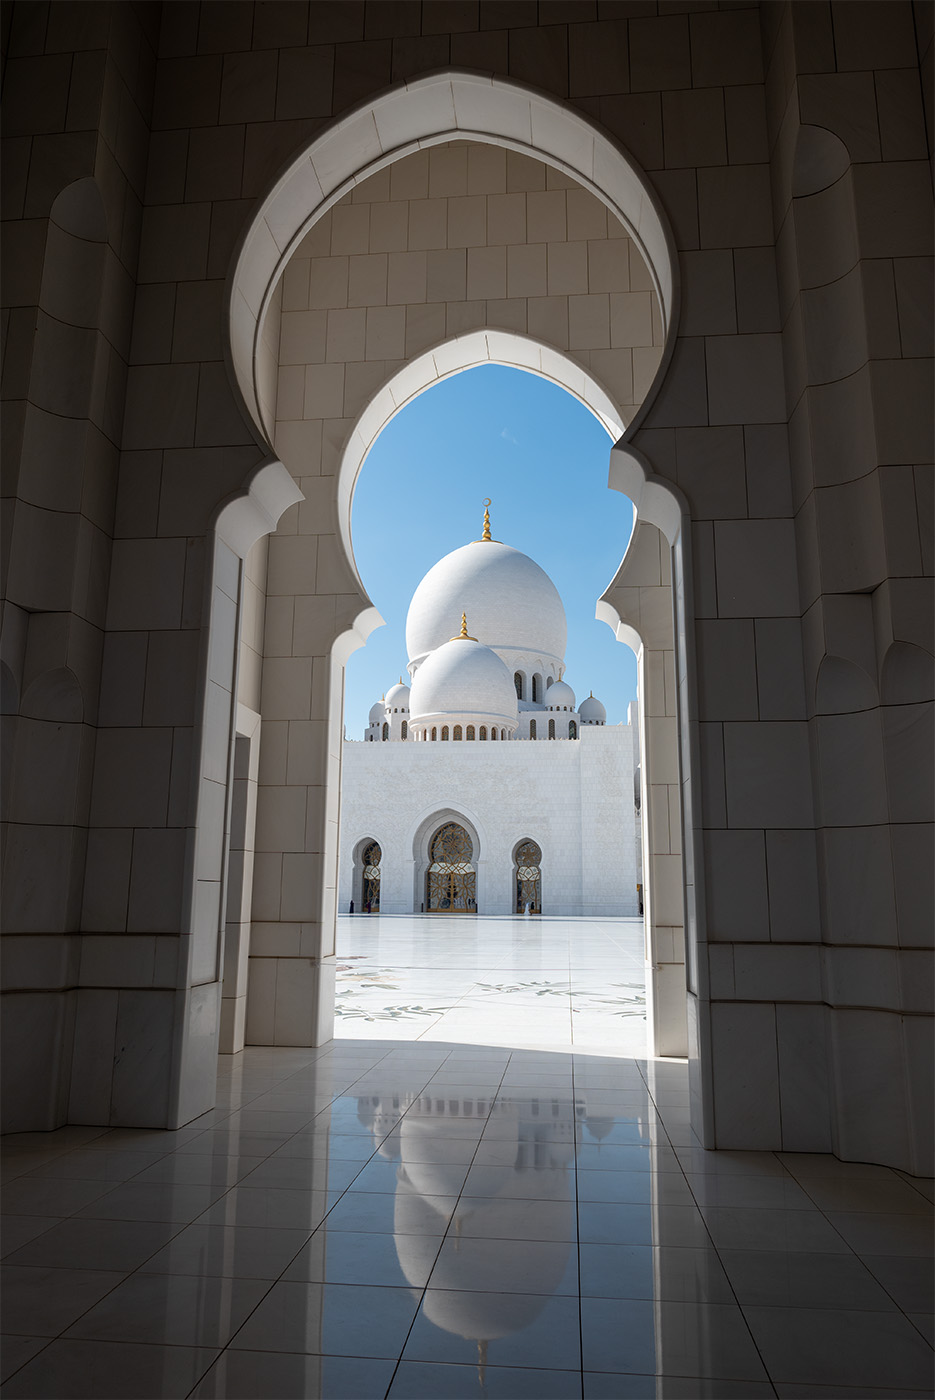 Sheikh Zayed Grand Mosque seen through an archway